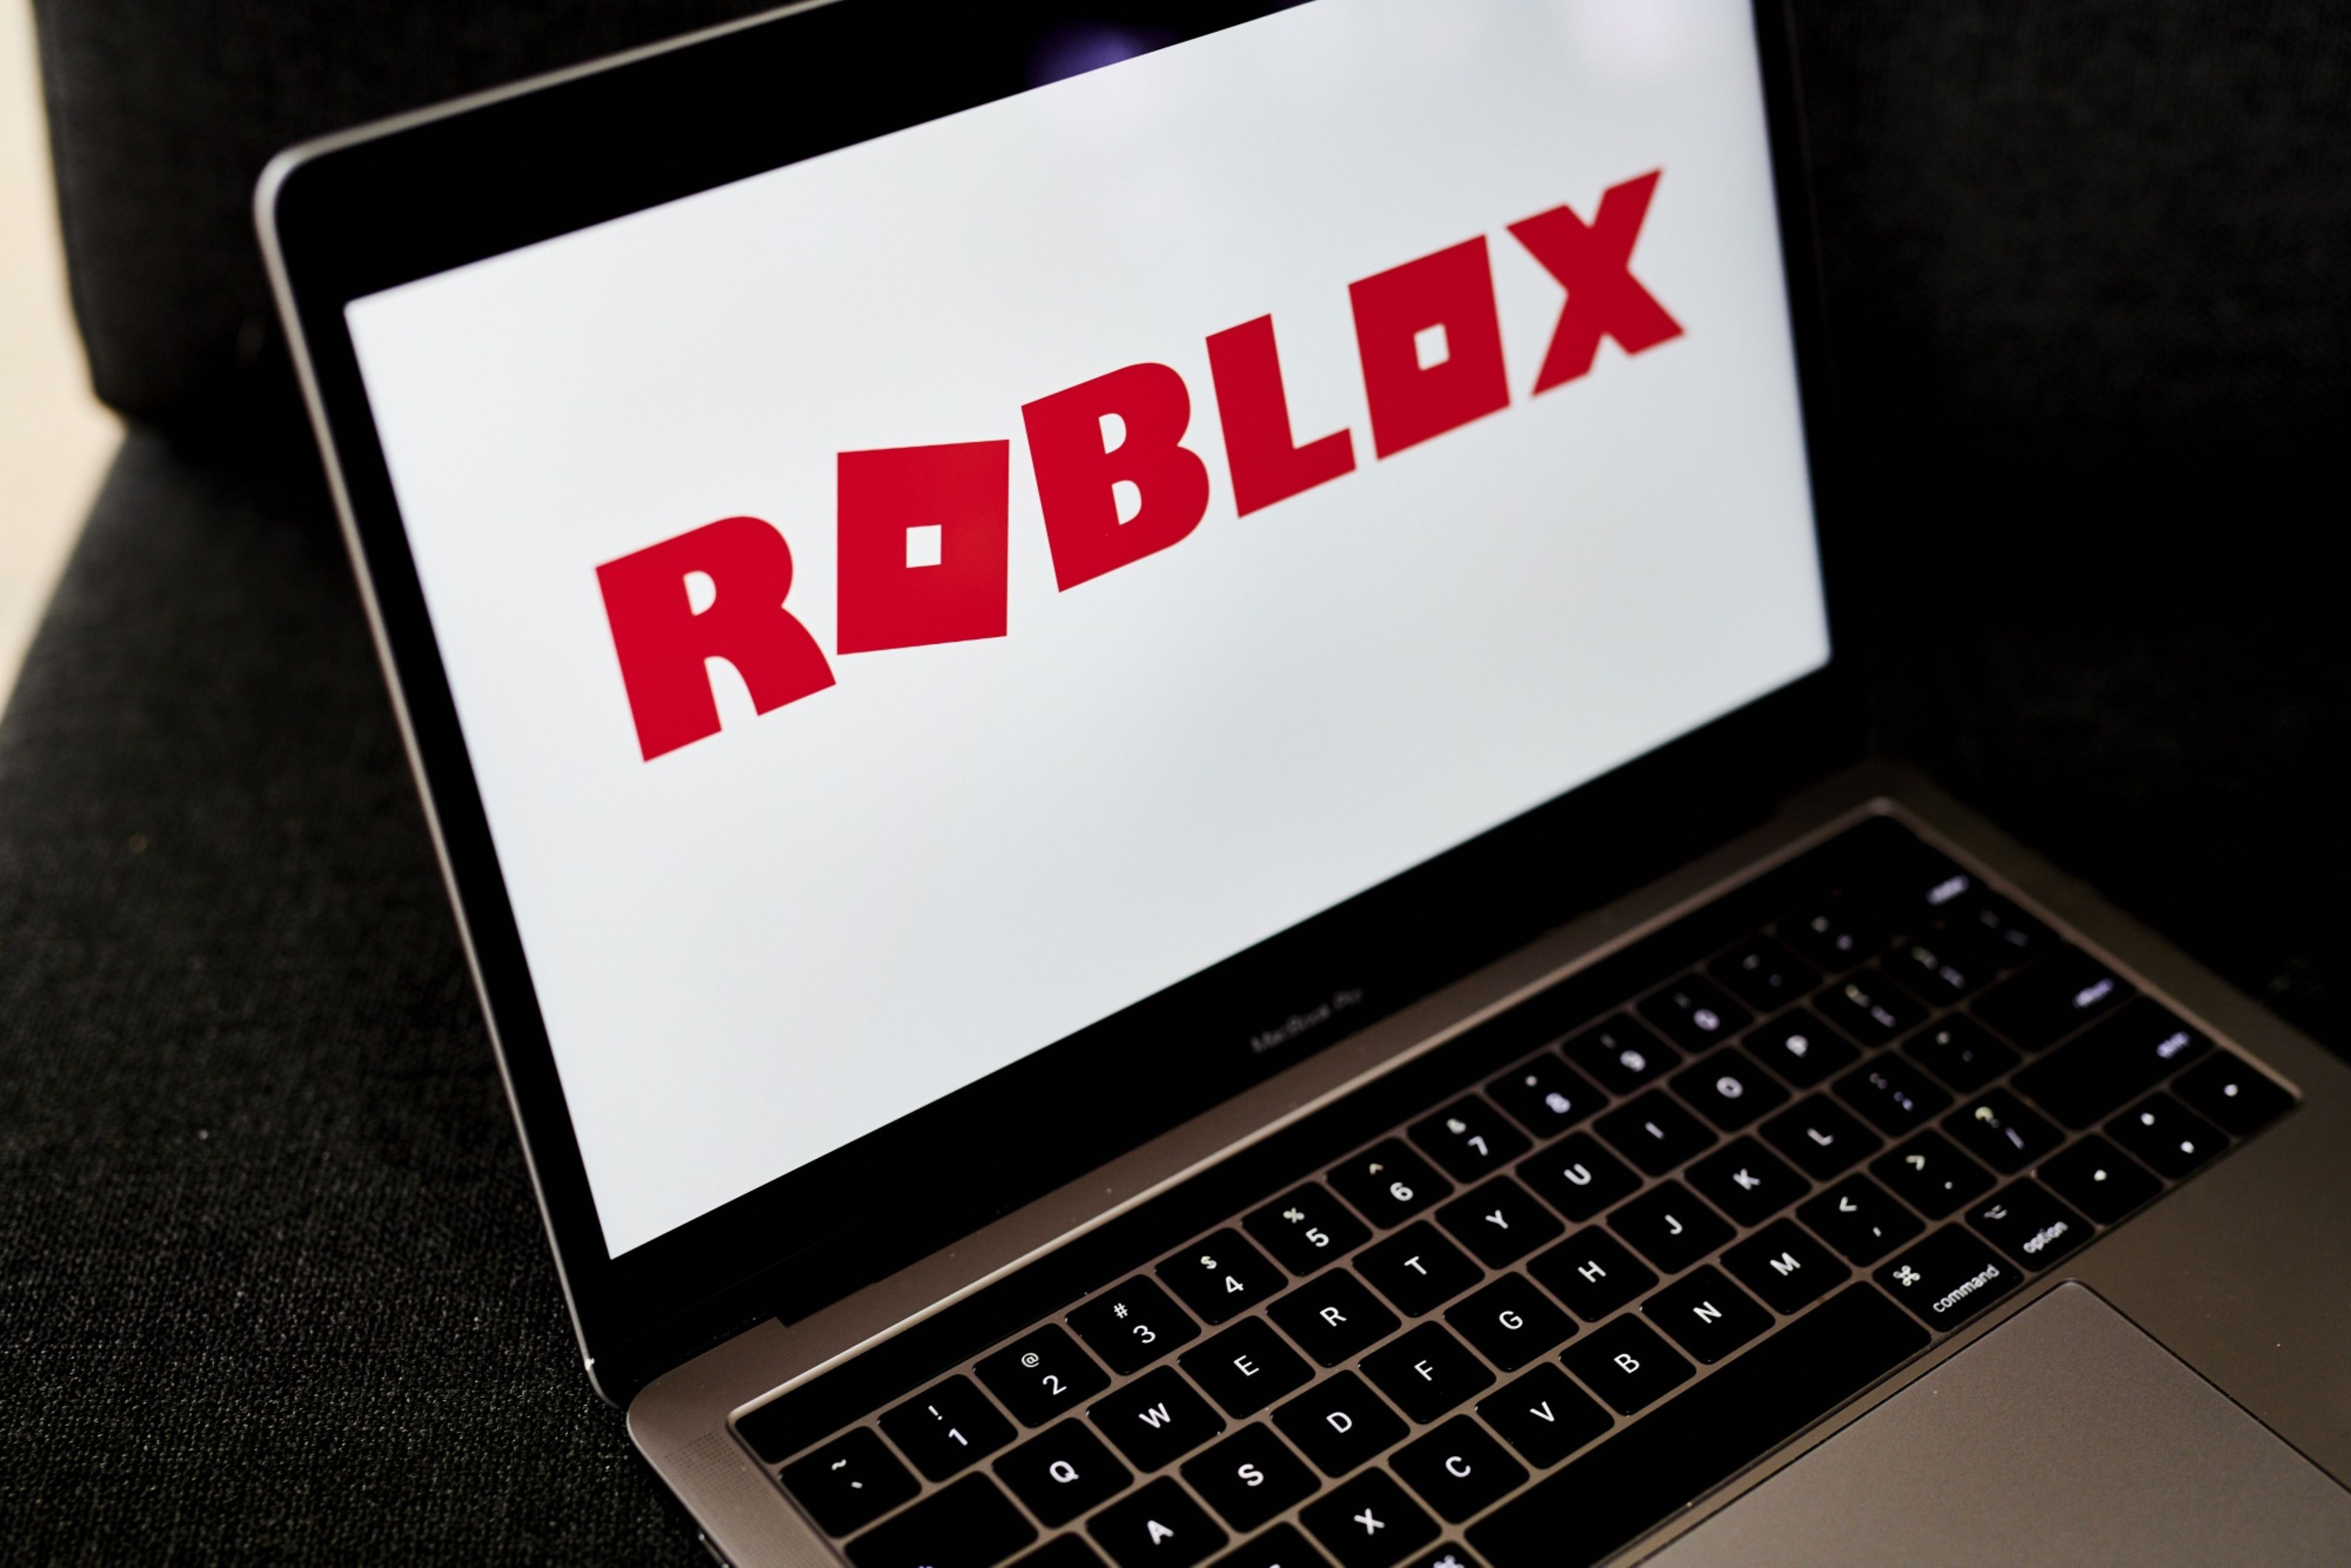 Roblox Mastermind David Baszucki Creates $3 Billion Fortune From Virtual  World - Bloomberg